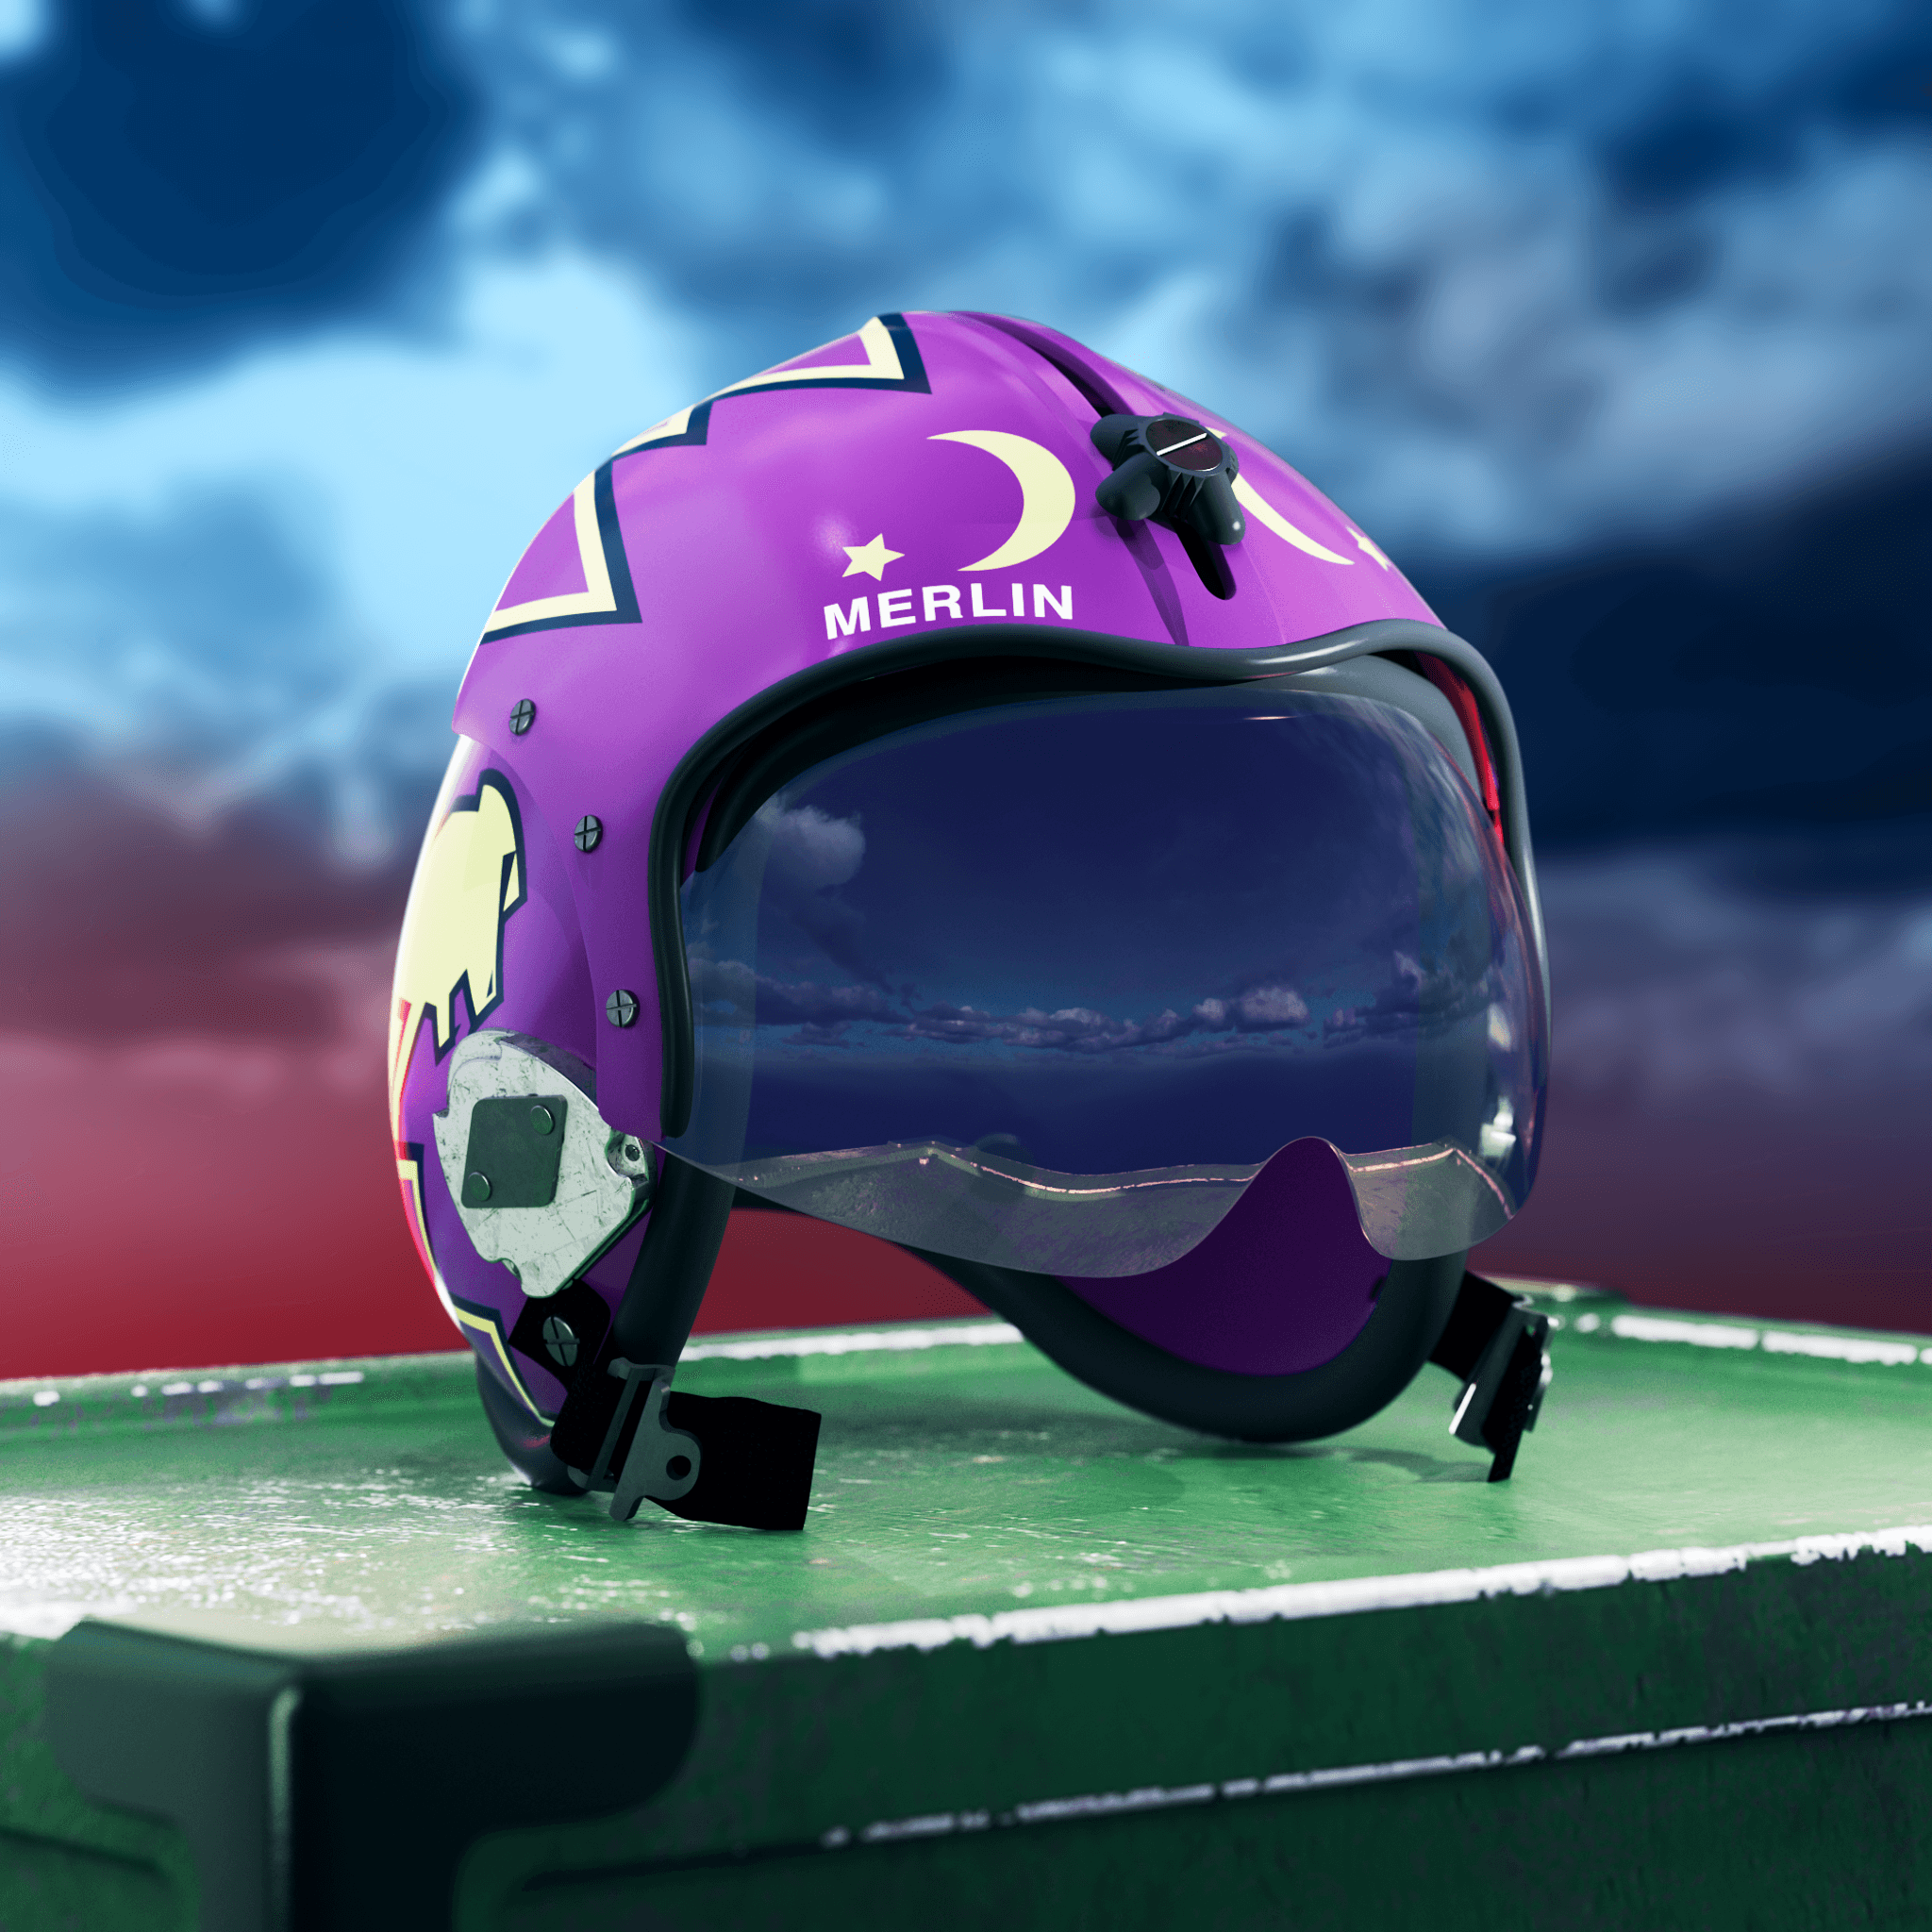 Merlin's Helmet